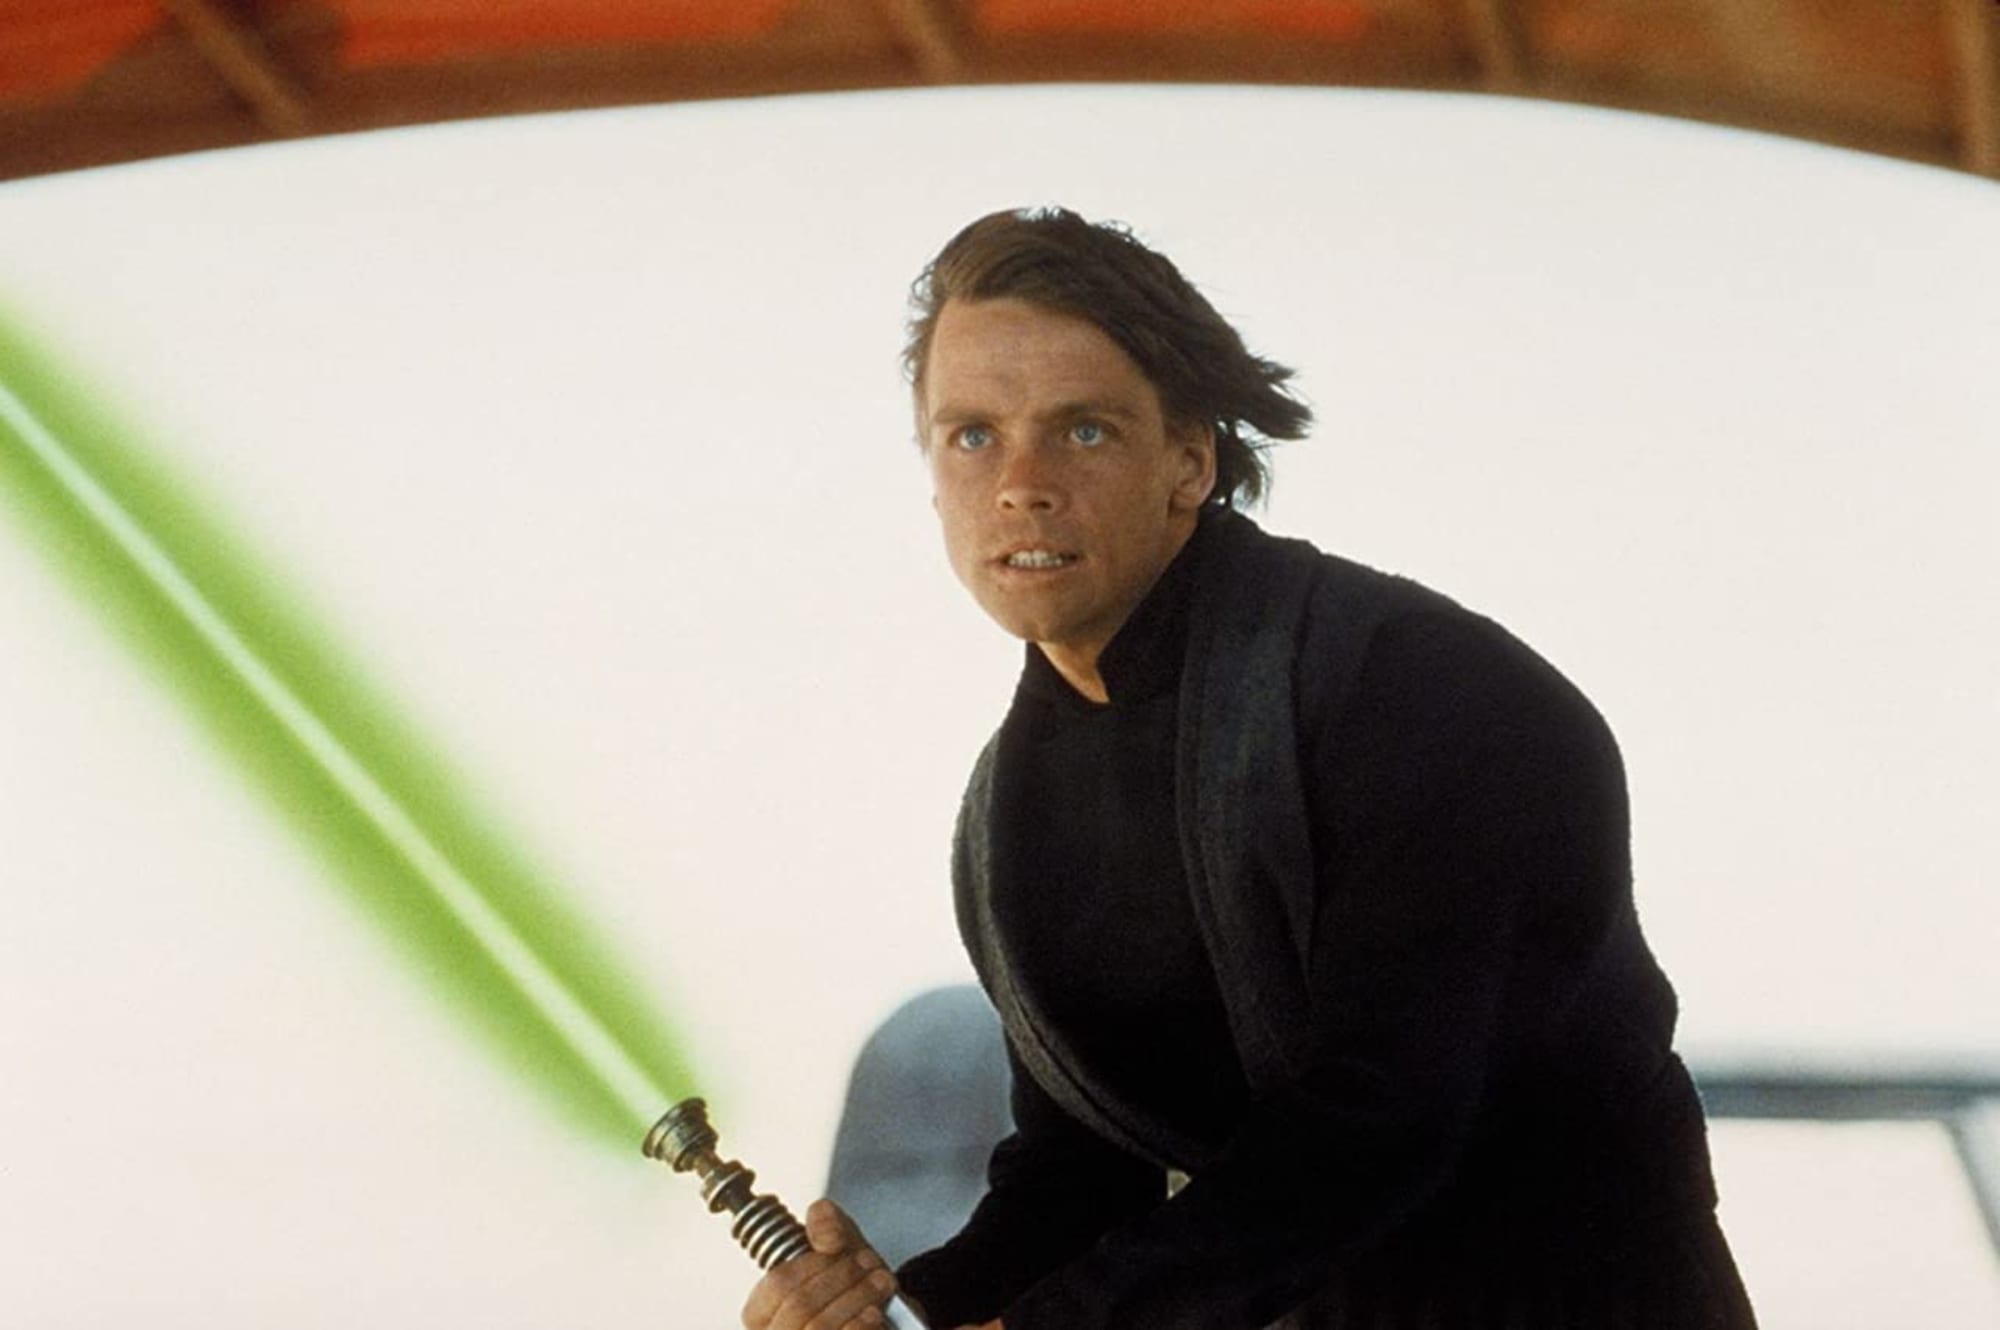 Luke-Skywalker-Return-of-the-Jedi.jpg